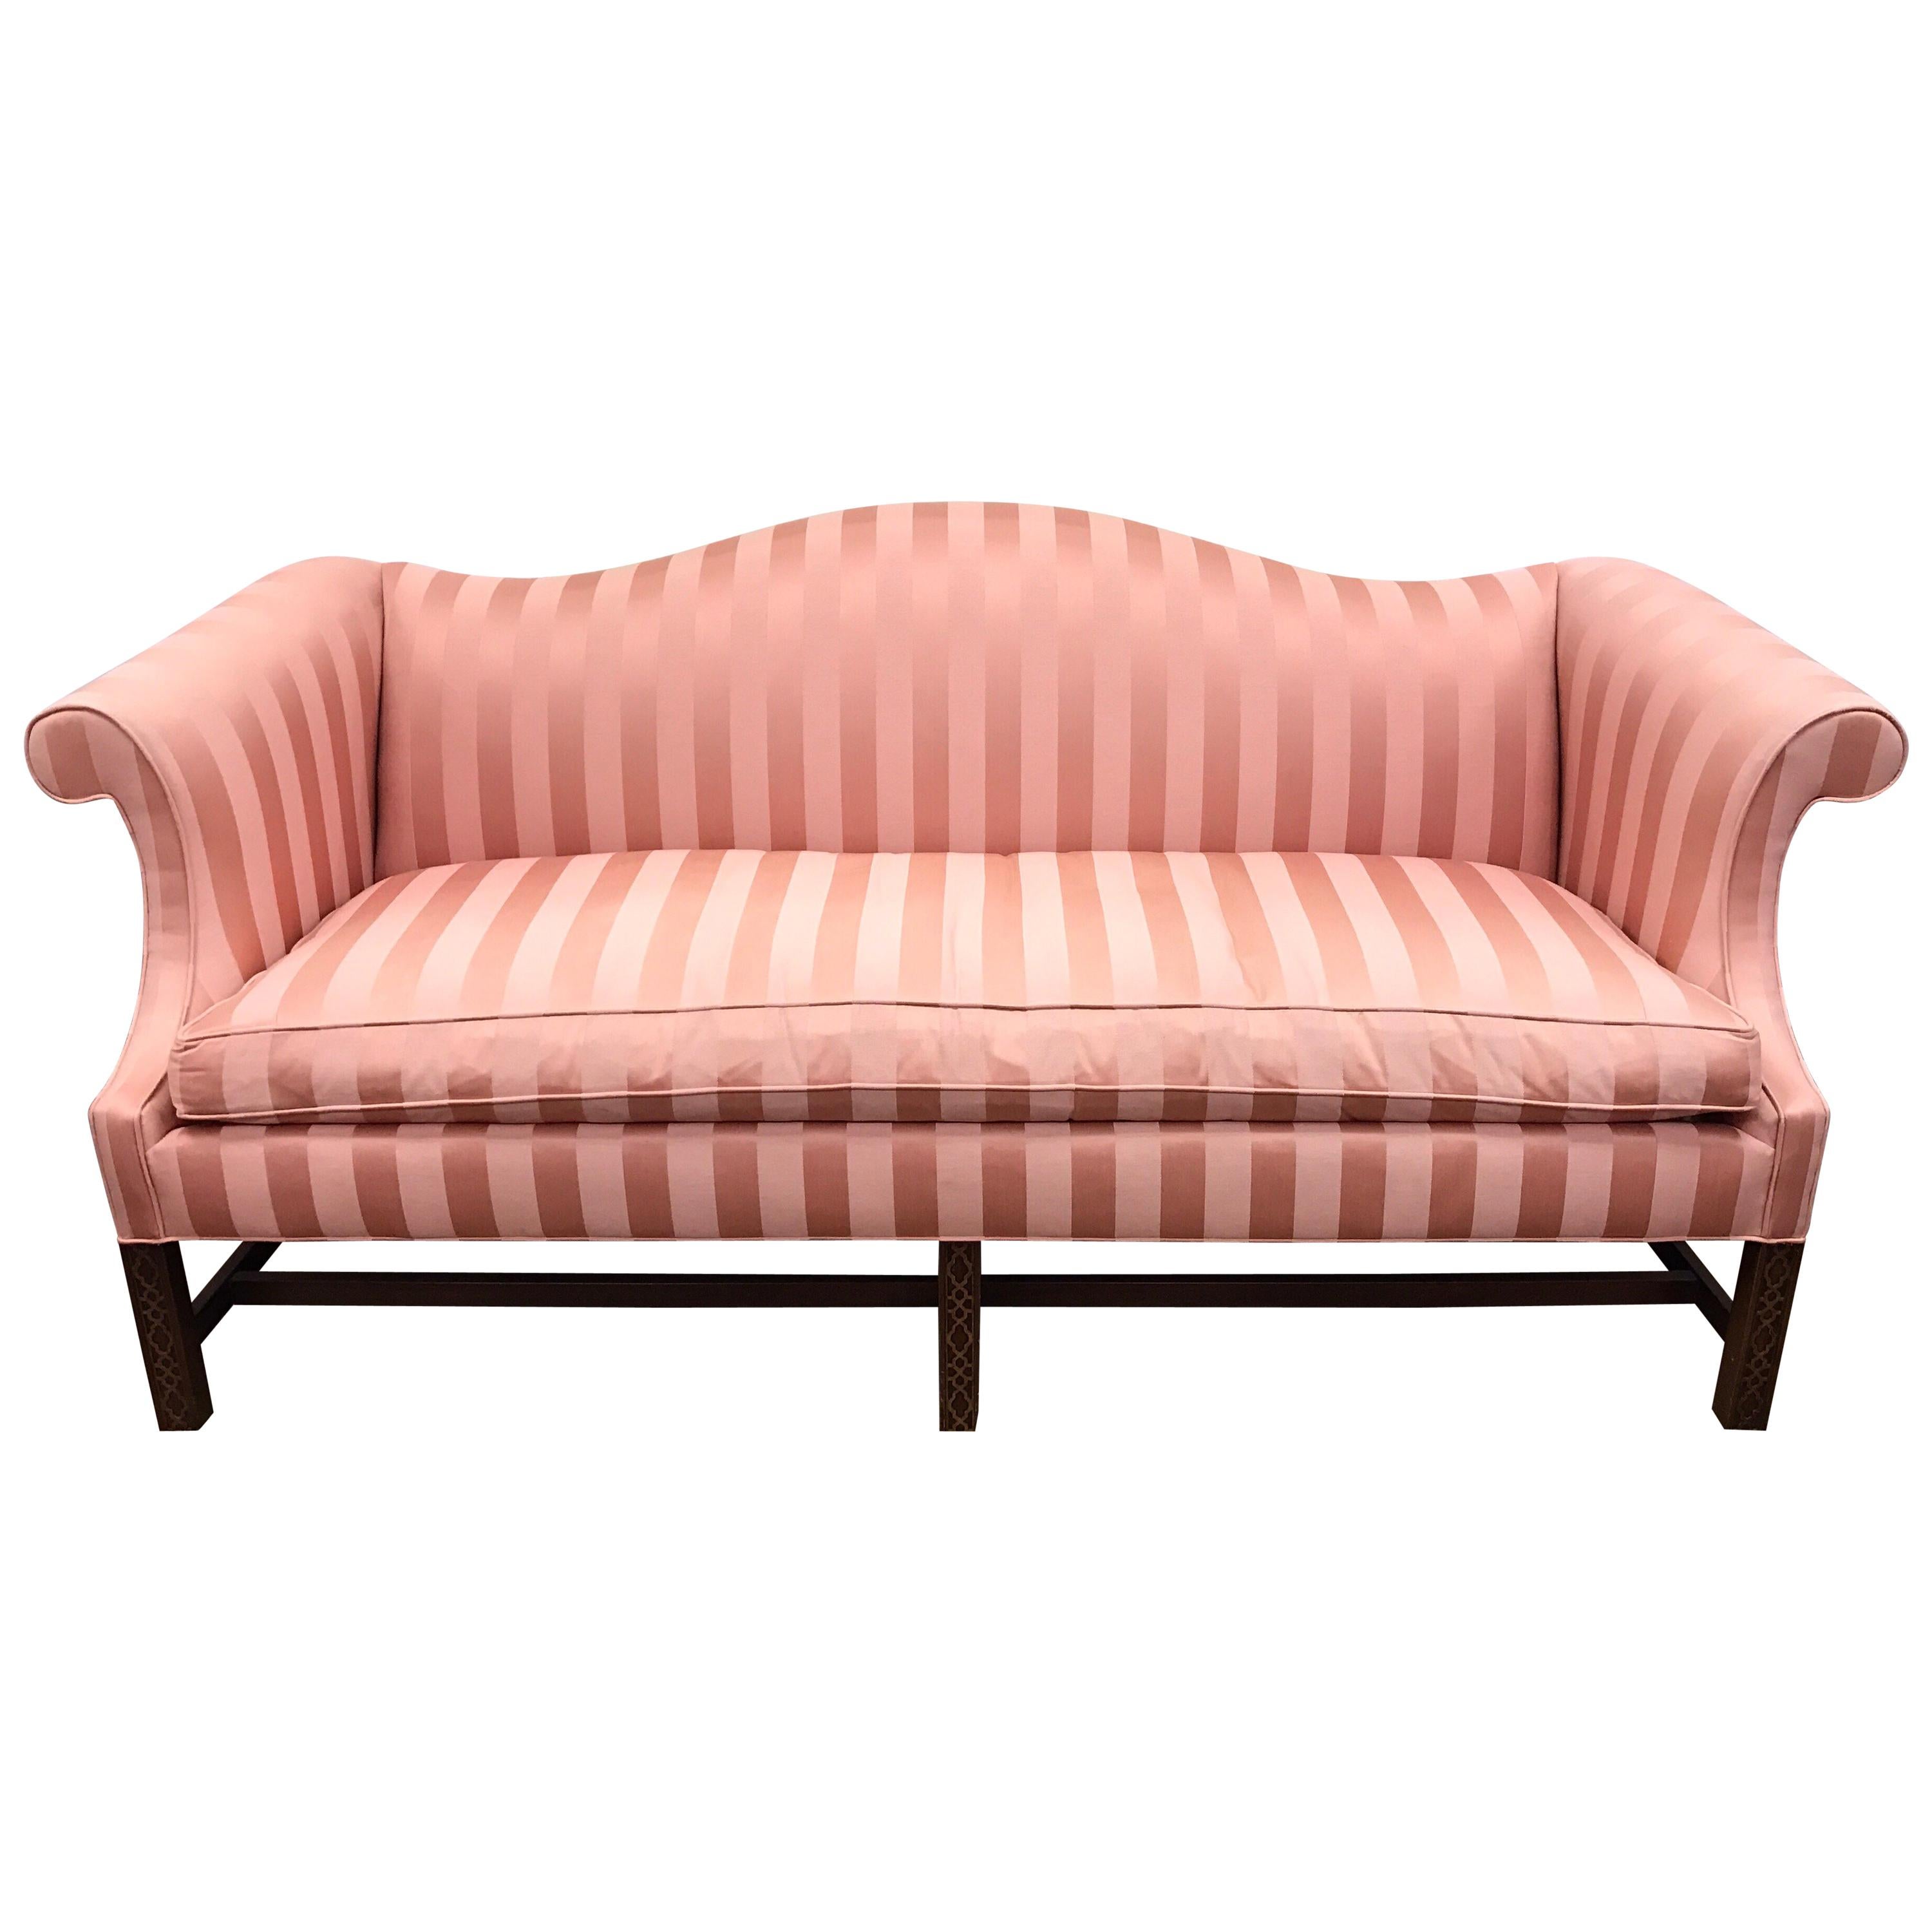 Chippendale Style Pink Camelback Mahogany Sofa